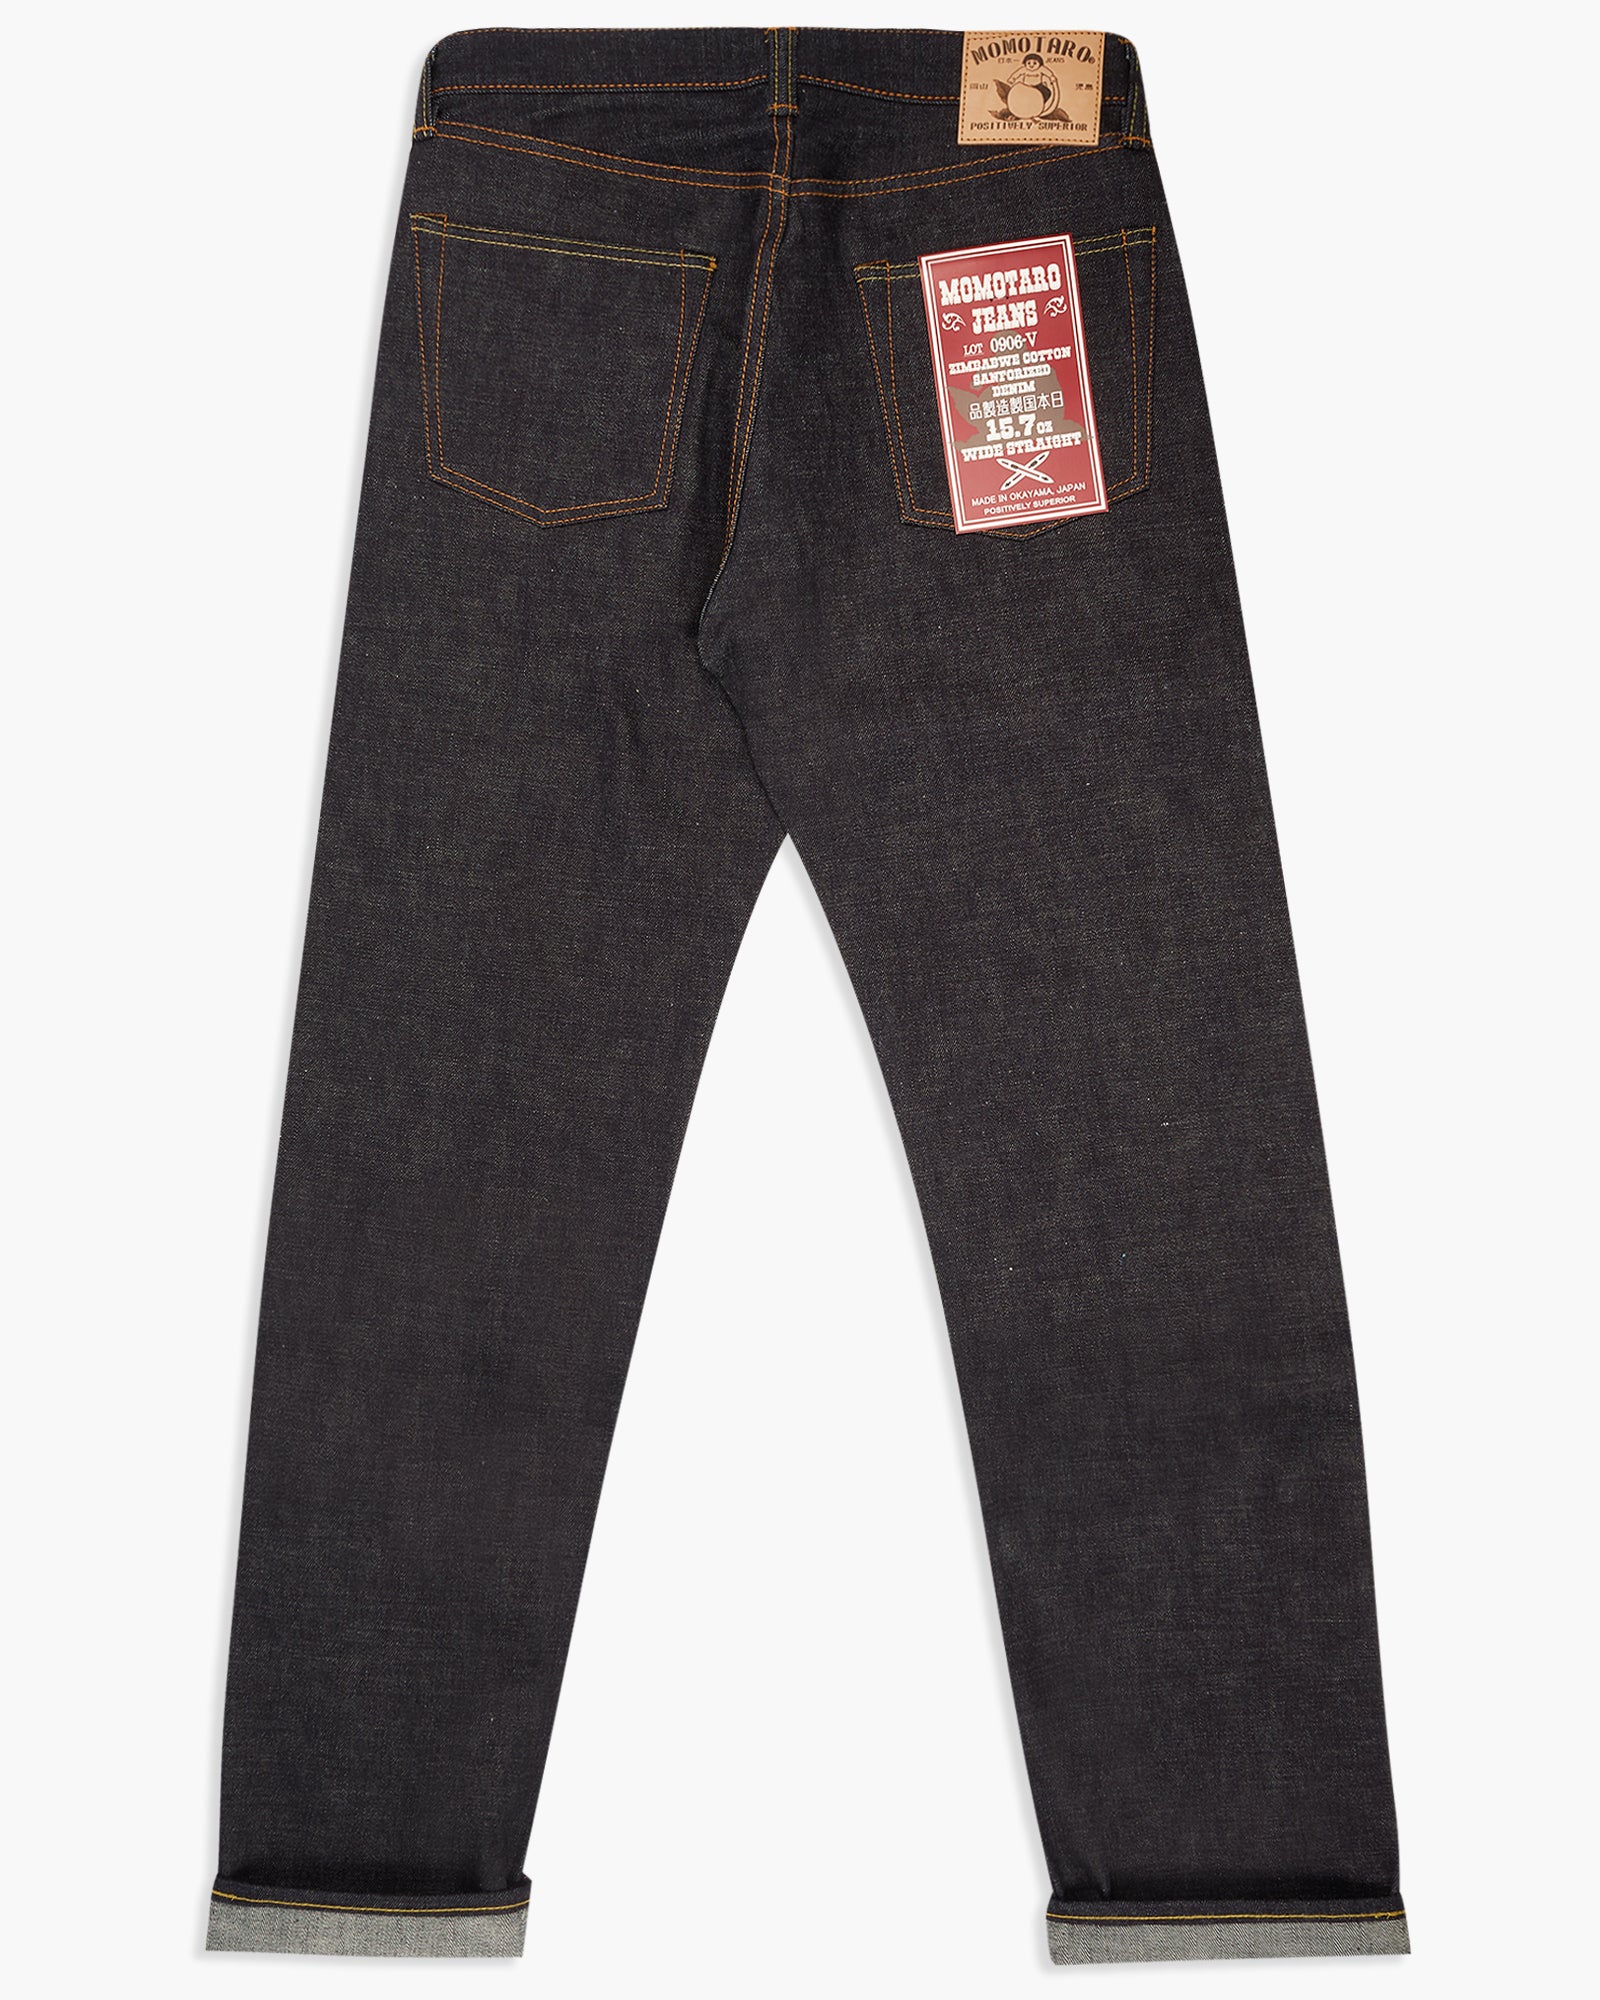 Momotaro Jeans 0906-V Classic Straight Jeans - 15.7oz Indigo Selvedge ...